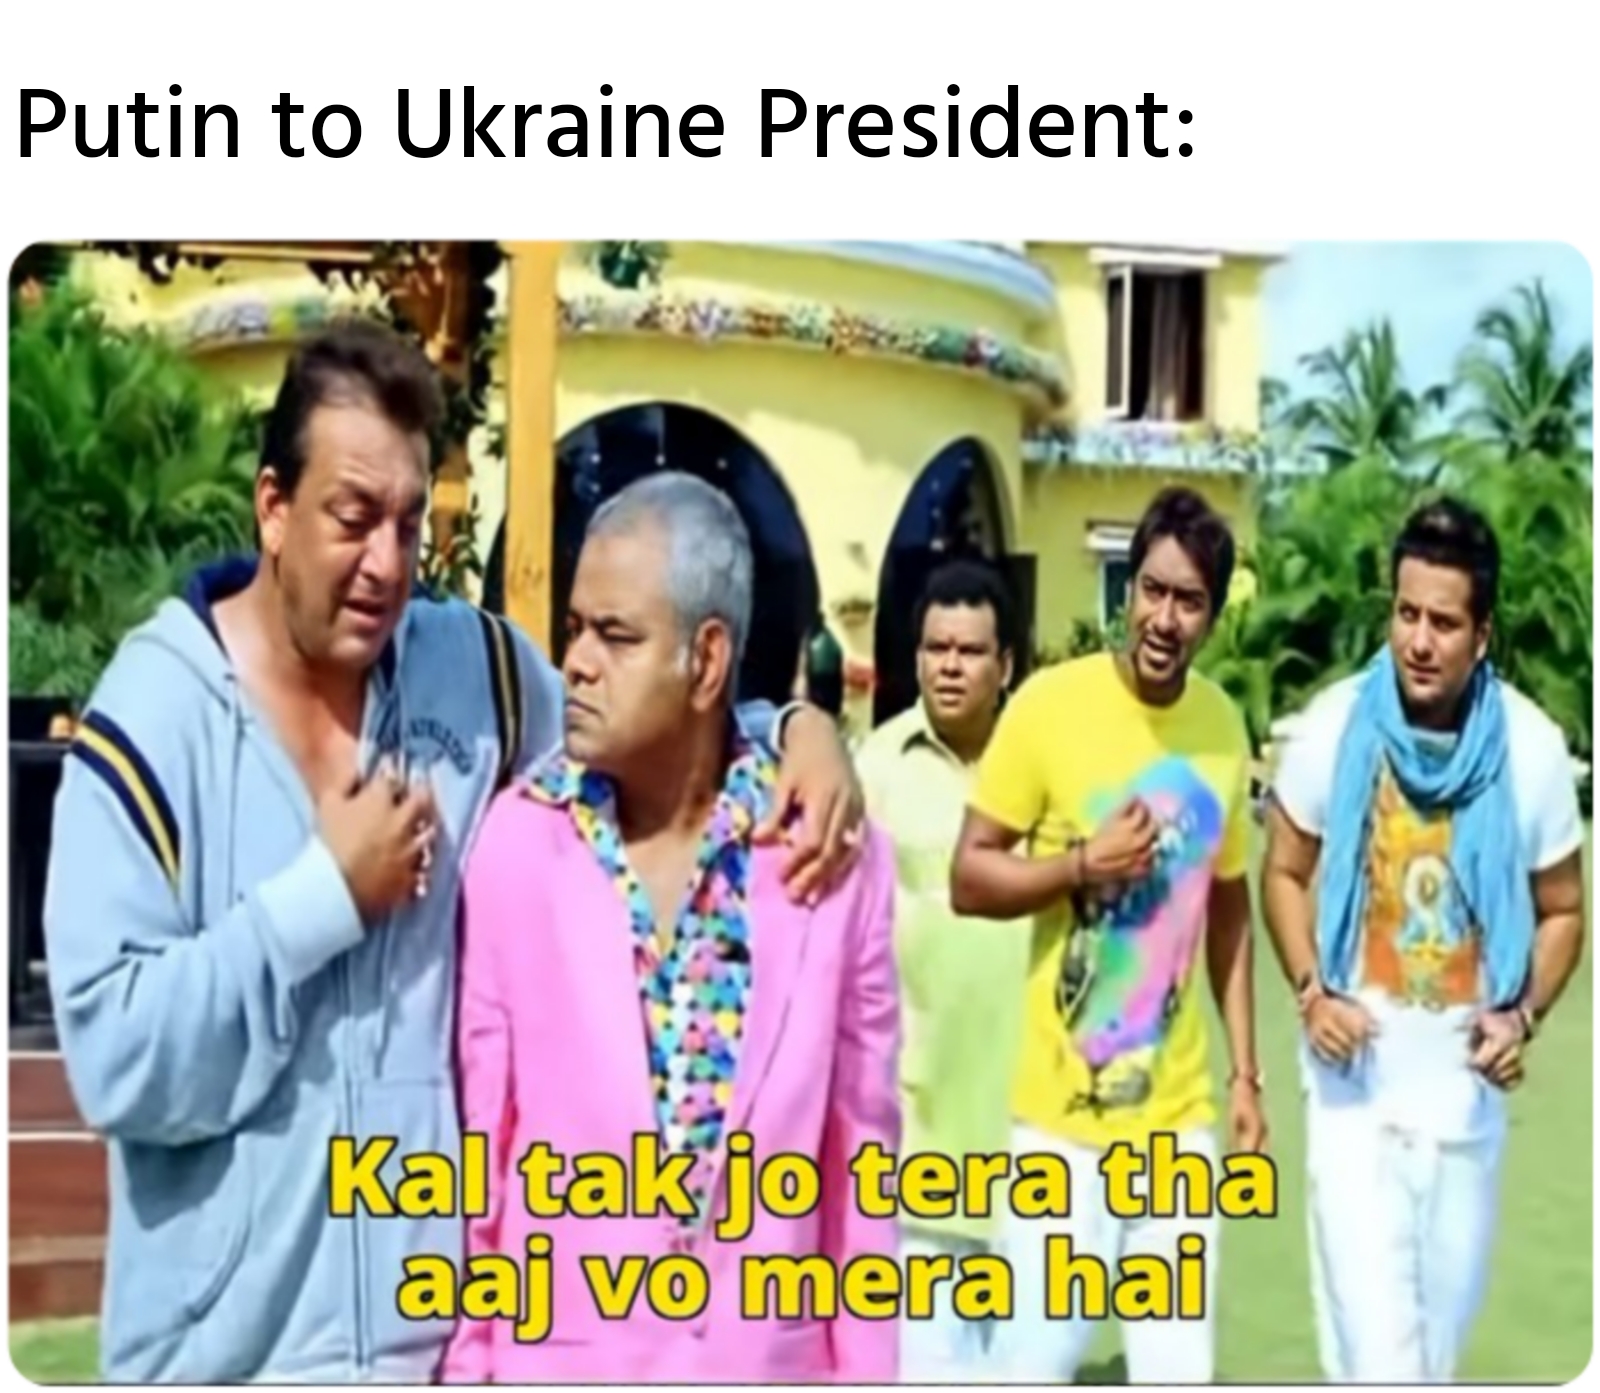 Putin to Ukraine President: Kal tak jo tera tha aaj wo mera hai meme.jpg